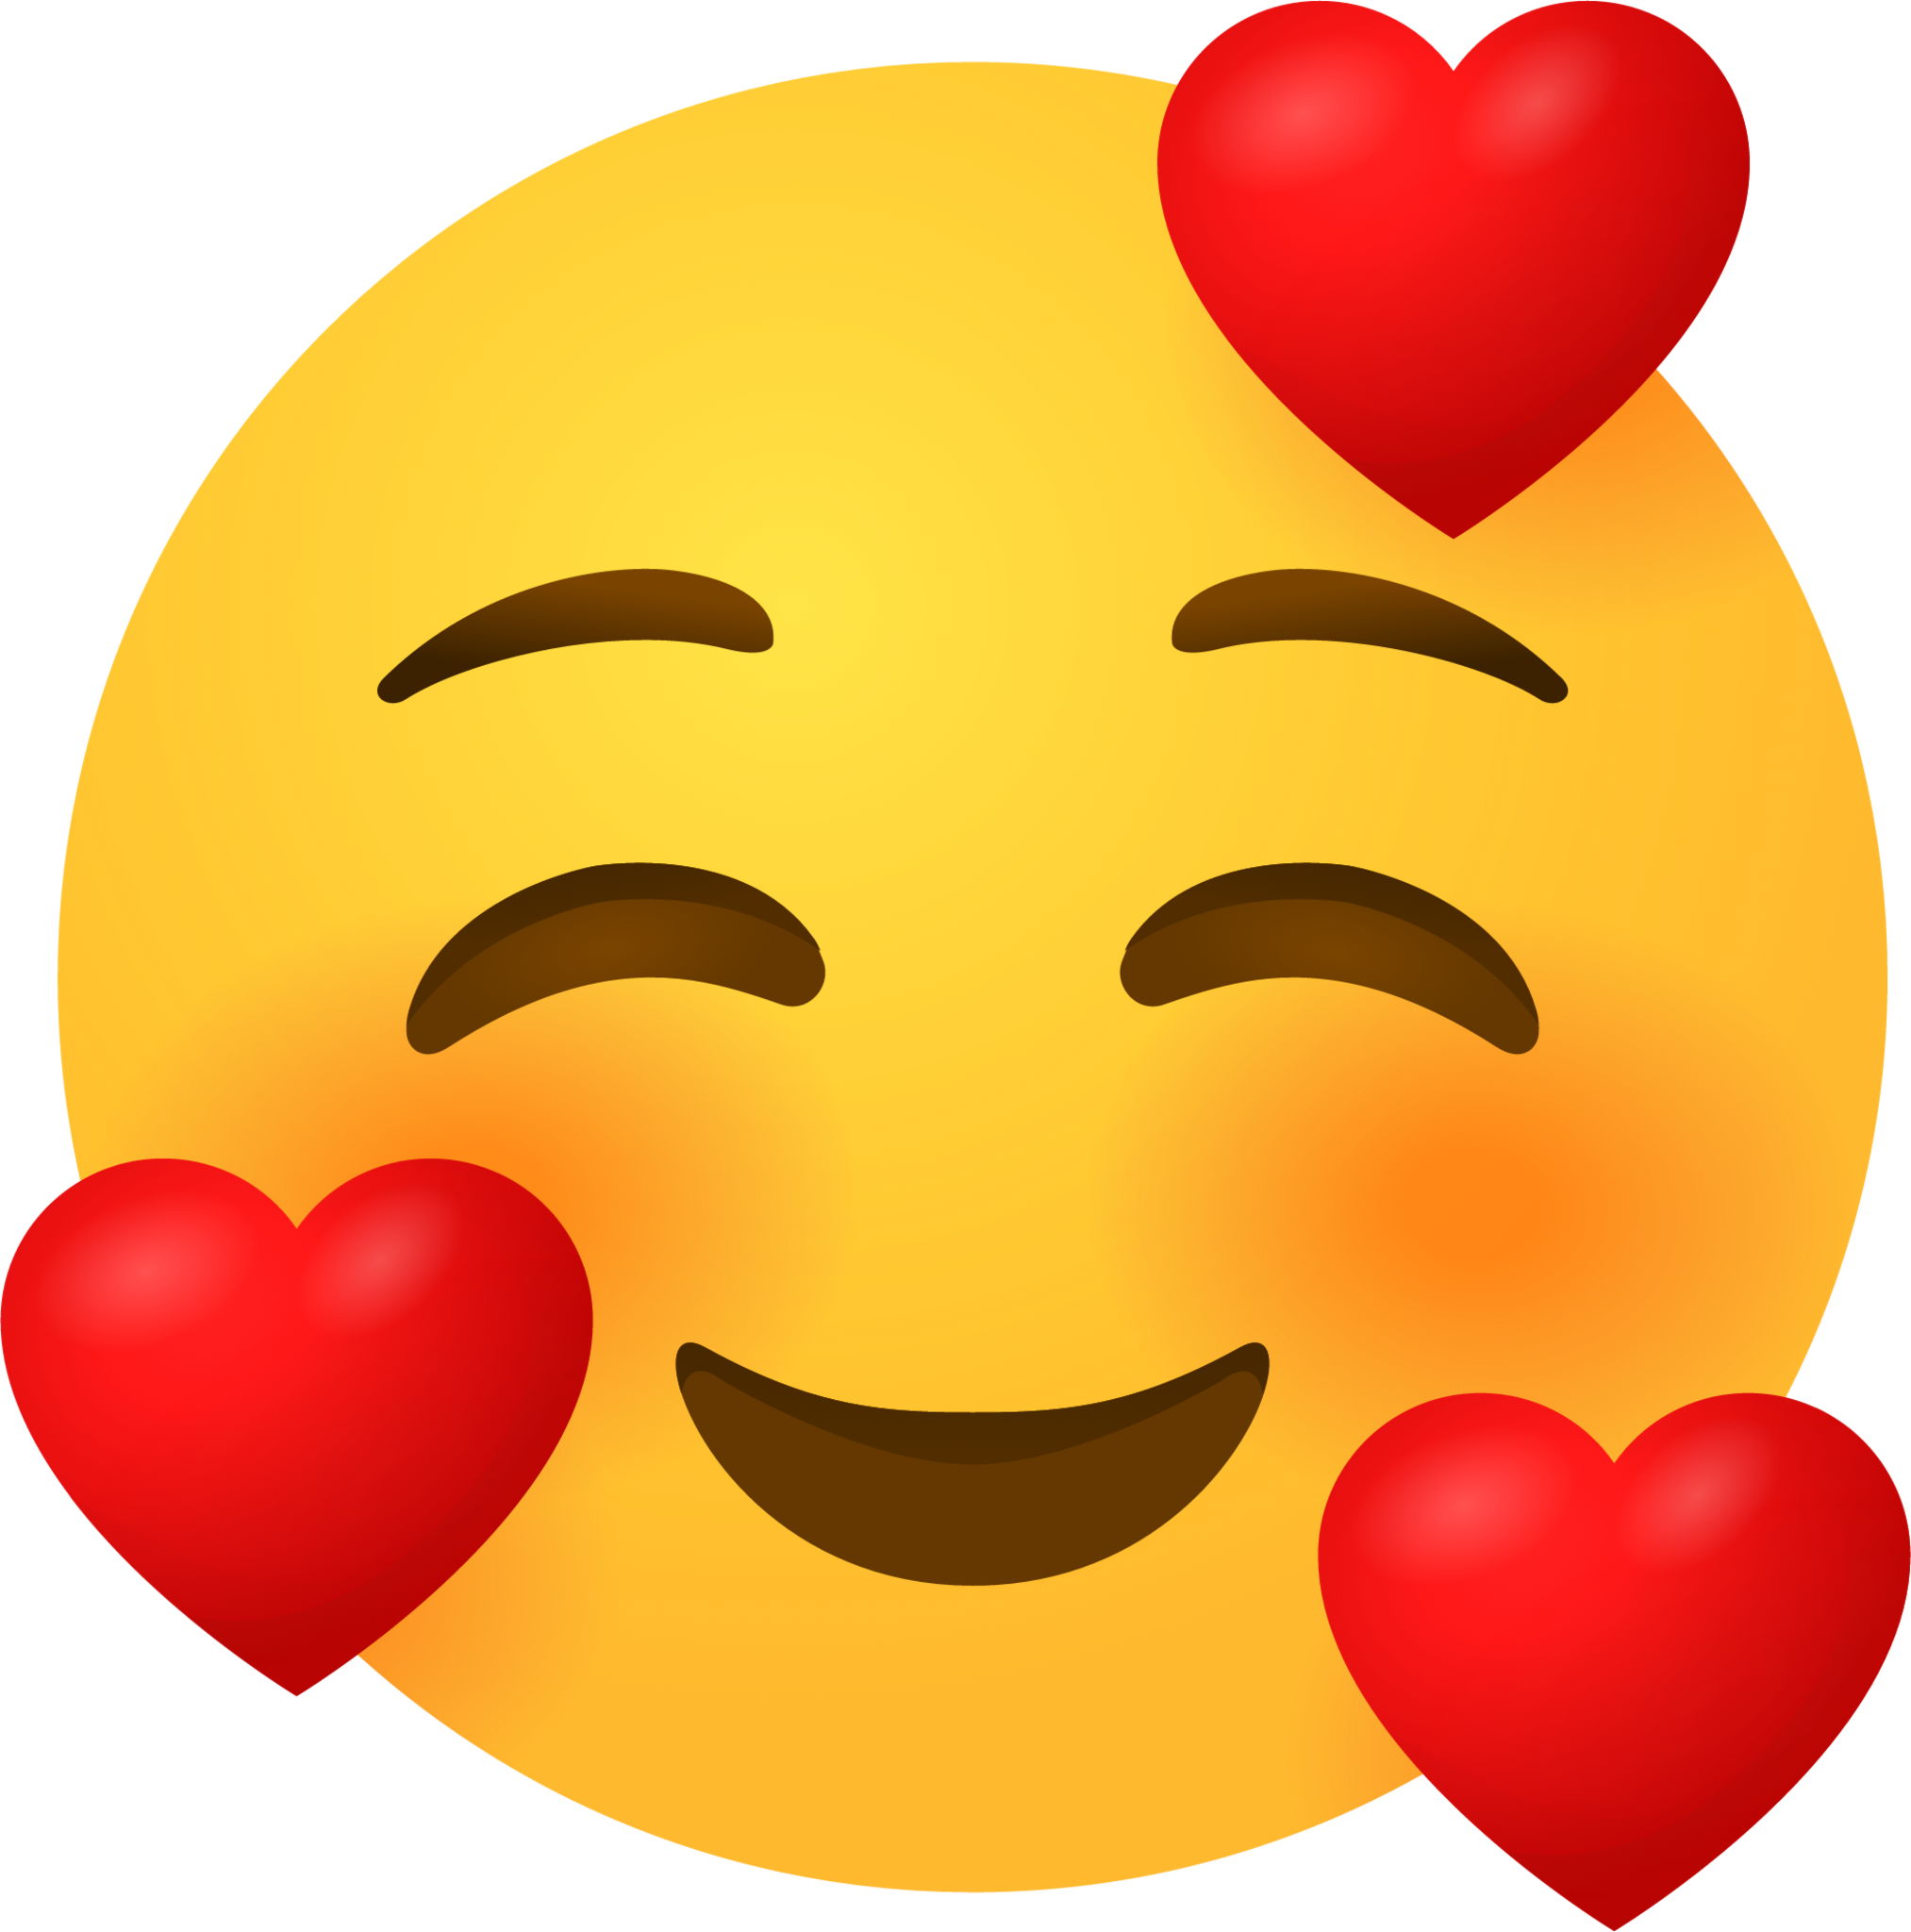 Smiling face with hearts emoji emoji